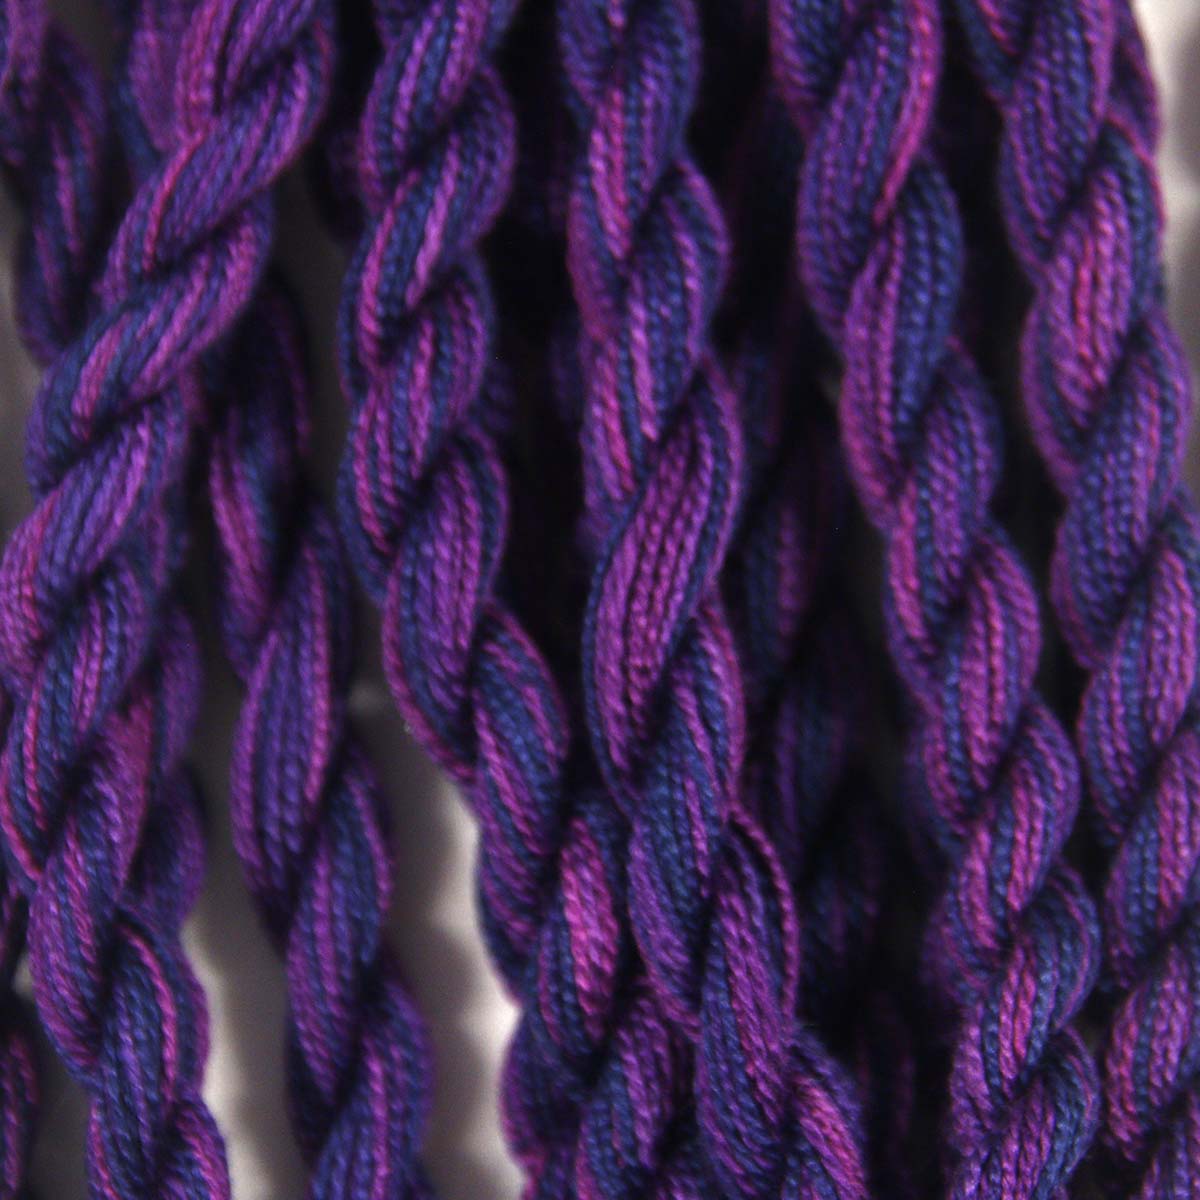 www.colourstreams.com.au Colour Streams Hand Dyed Cotton Threads Cotto Strands Slow Stitch Embroidery Textile Arts Fibre DL 50 Blackberry Ripple Purples Blues